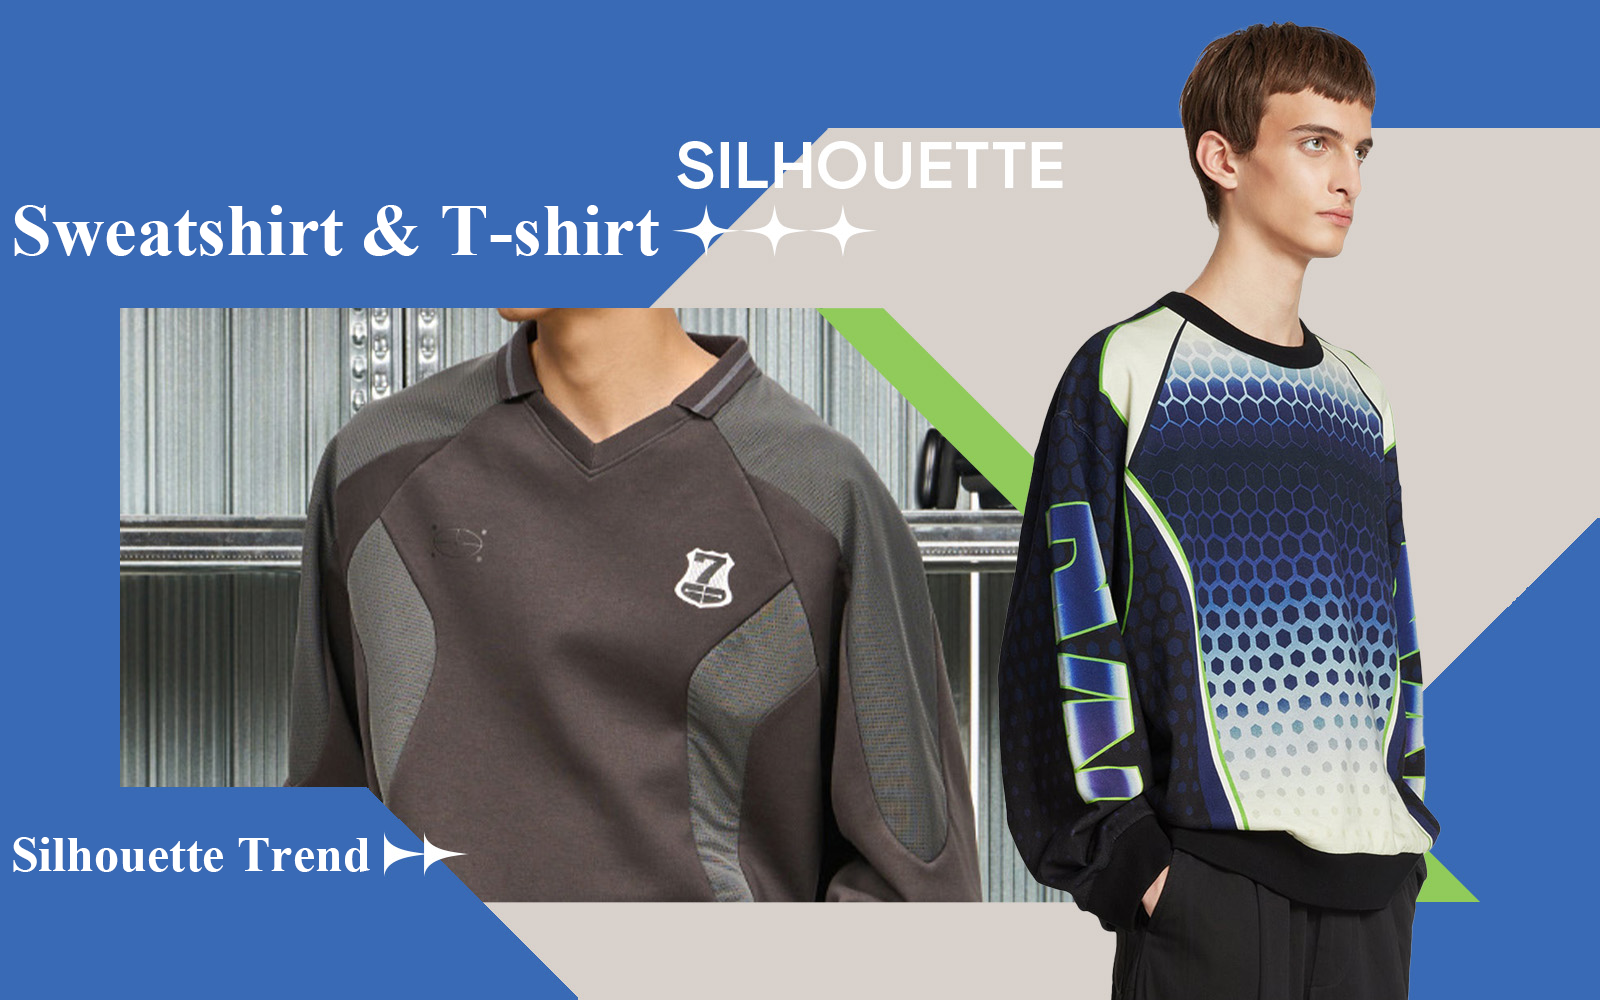 Mountaineering Street Fashion -- The Silhouette Trend for Men's Sweatshirt